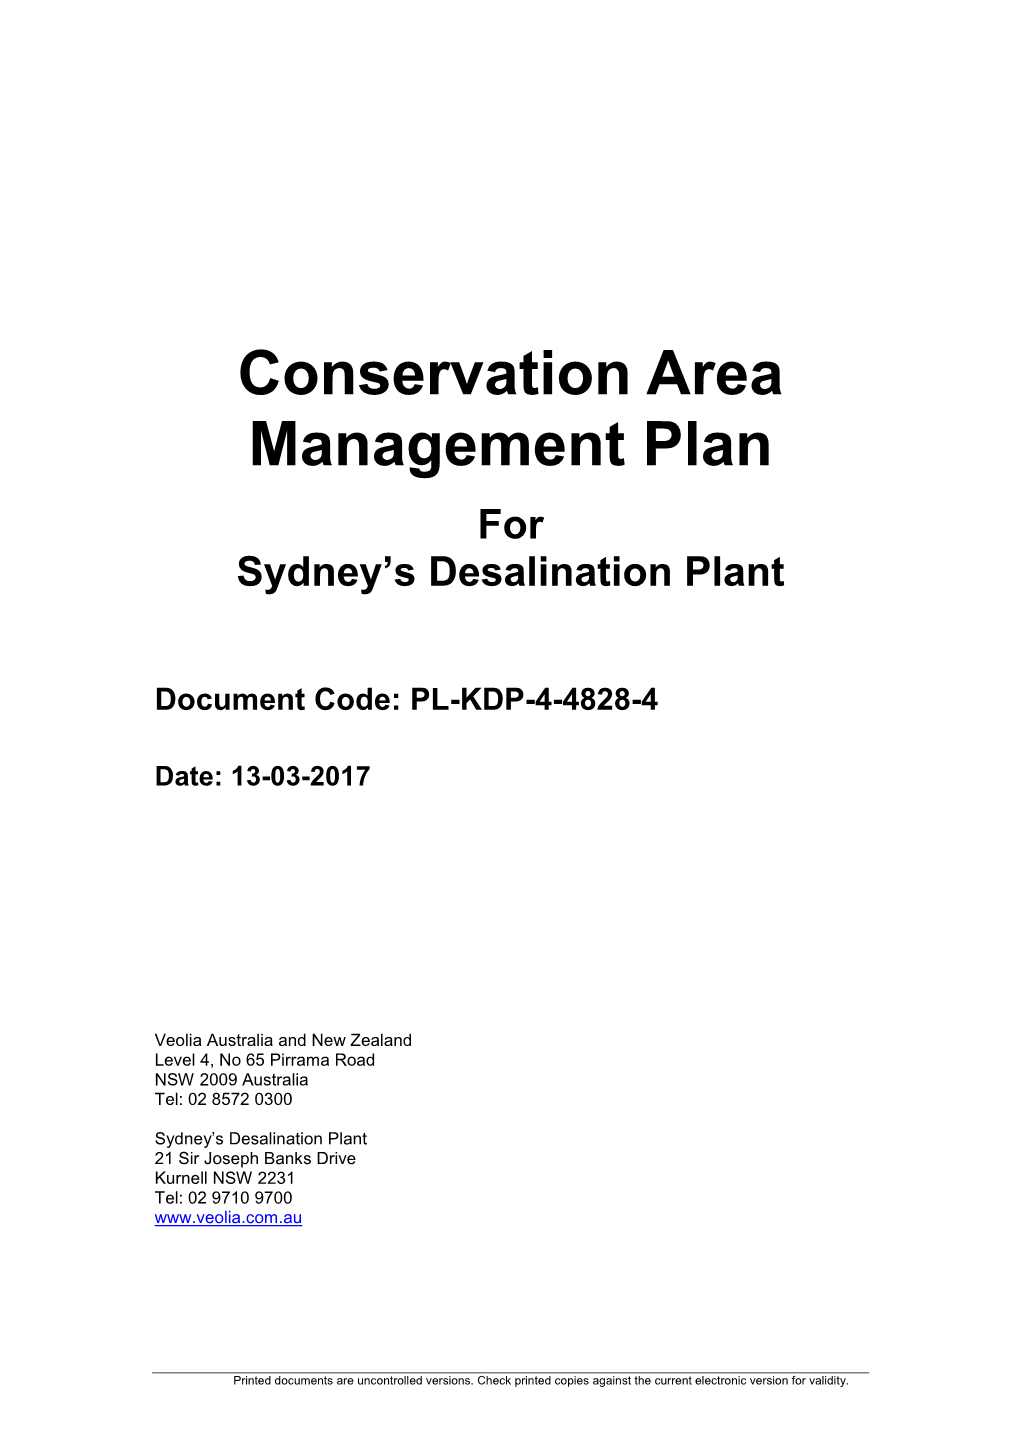 Conservation Area Management Plan